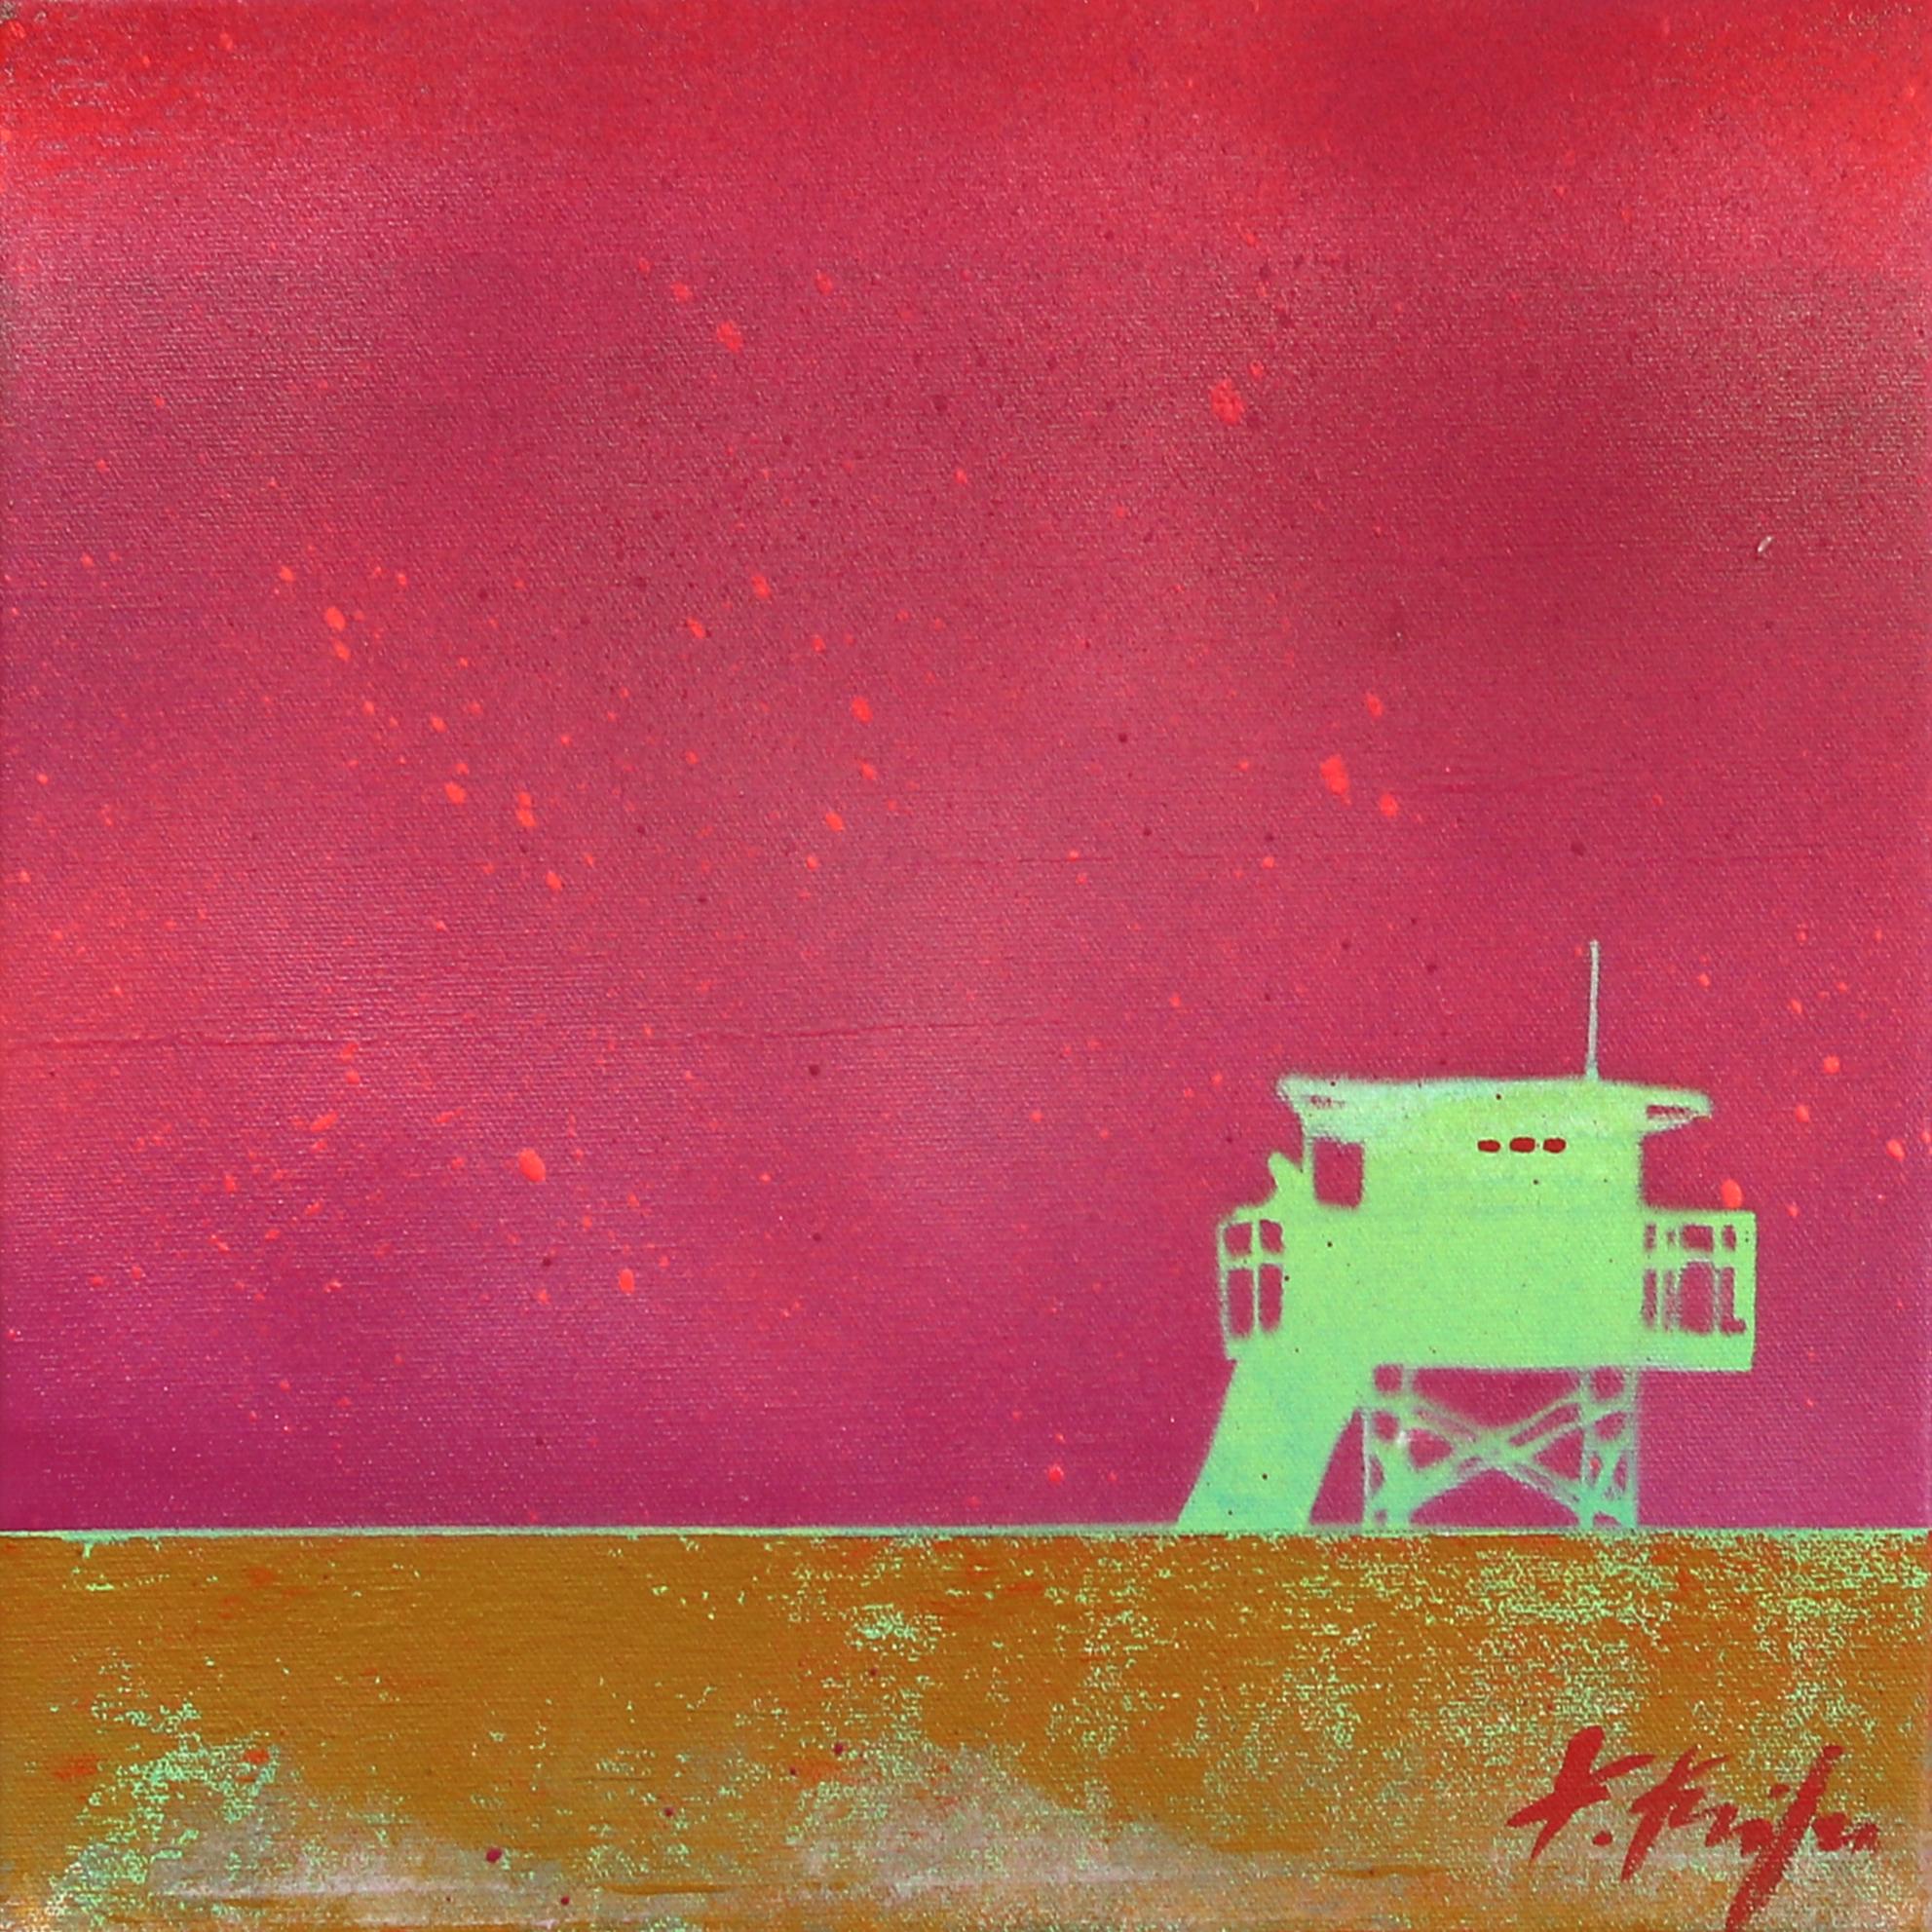 Kathleen Keifer Landscape Painting - Feeling Pink - Lifeguard Stand on Beach Original Pop Art Oceanscape Sky Painting